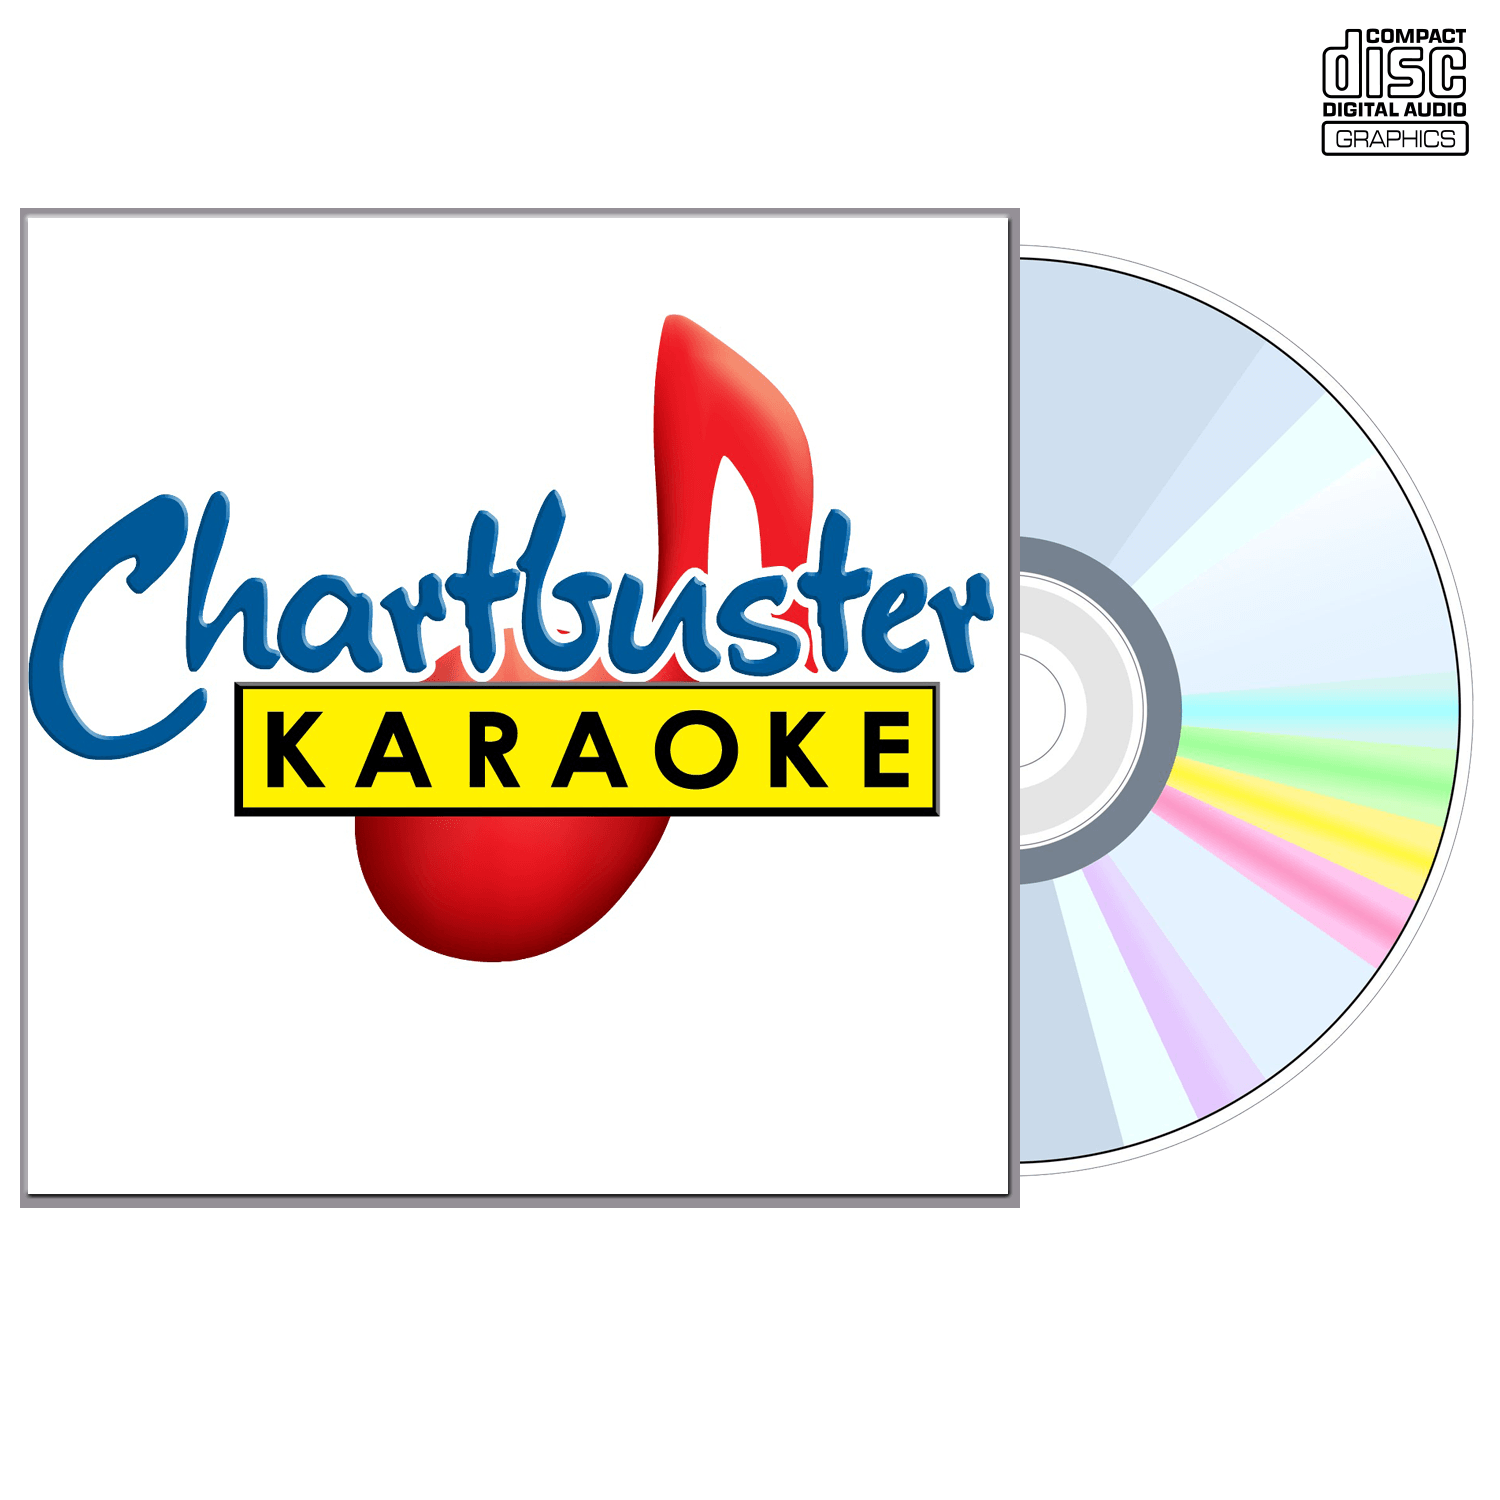 Willie Nelson Vol 1 - CD+G - Chartbuster Karaoke - Karaoke Home Entertainment